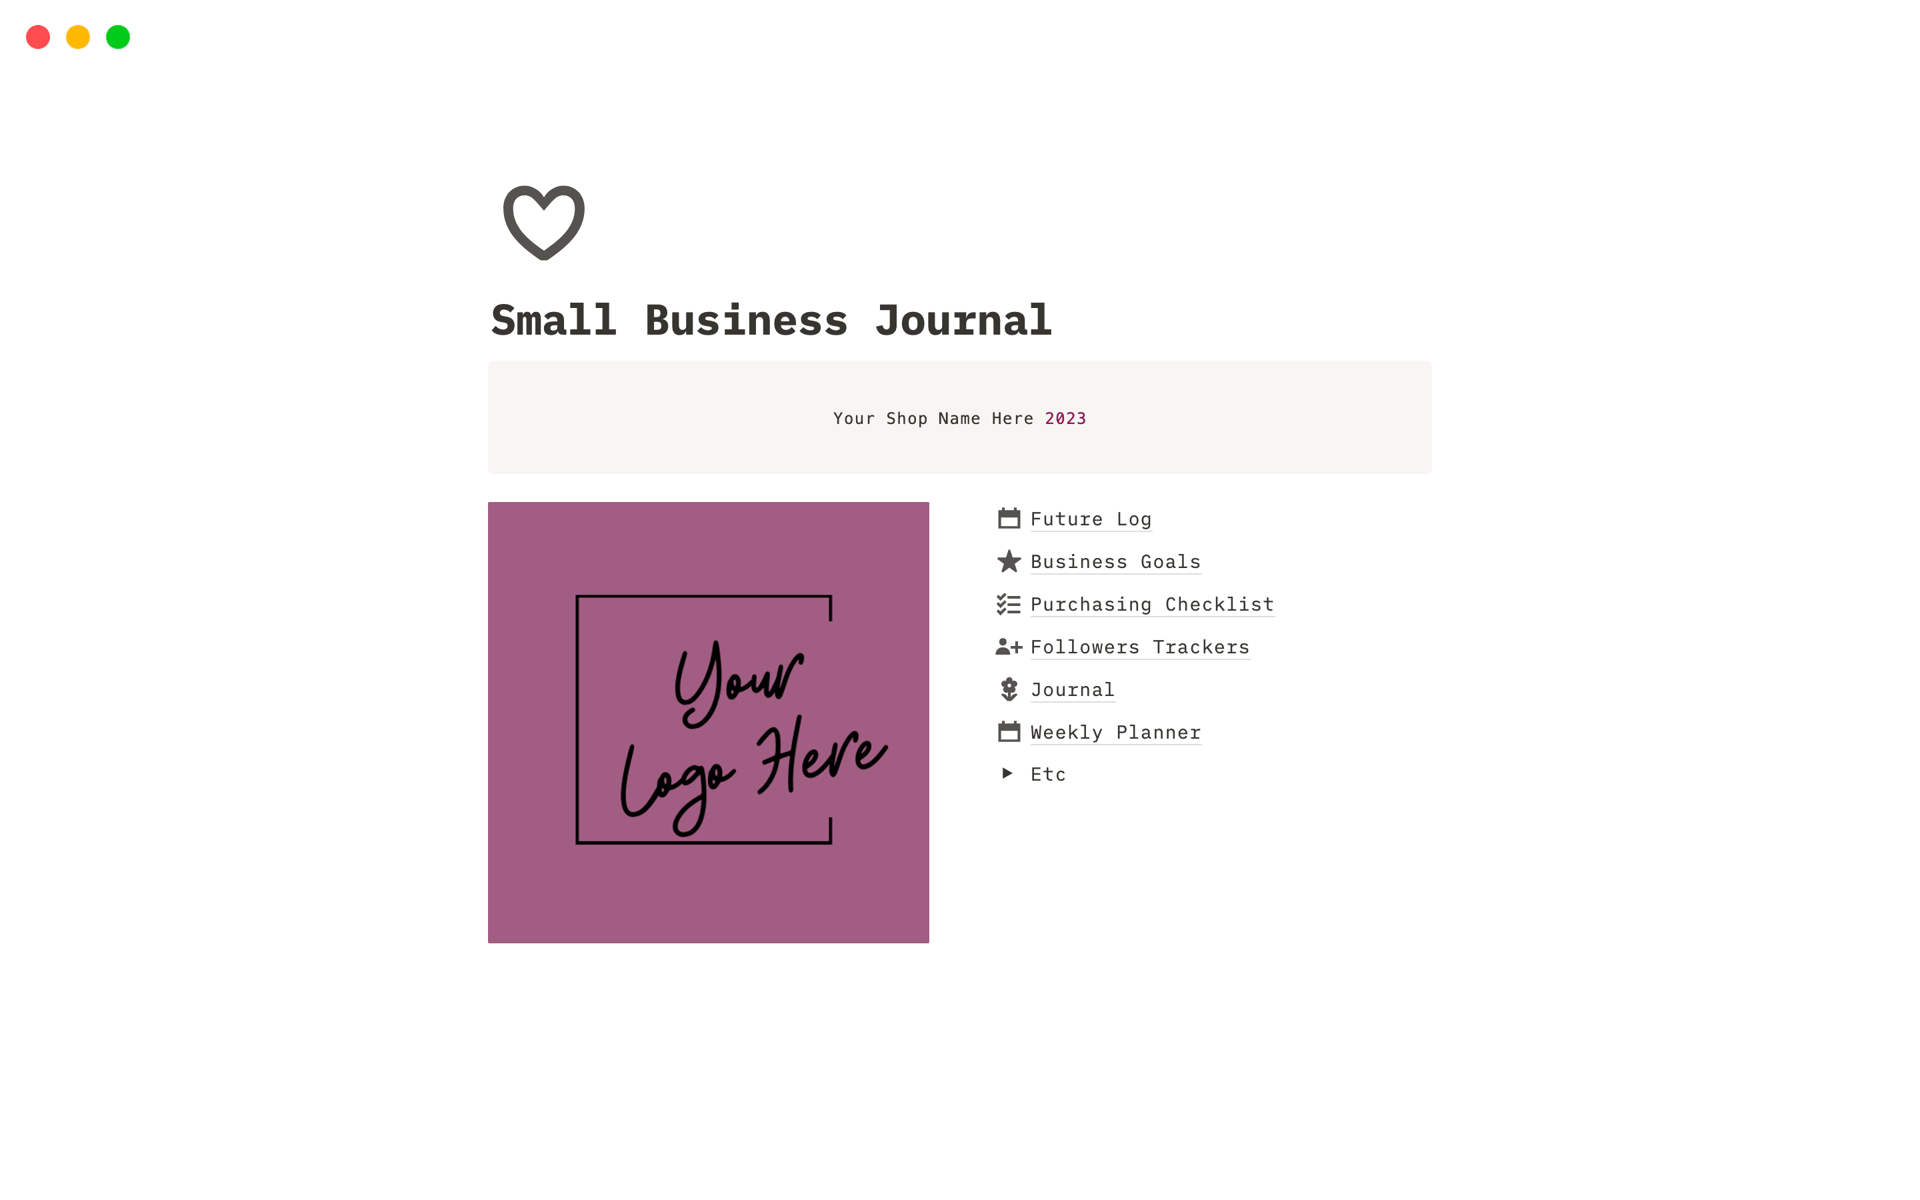 Vista previa de una plantilla para Small Business Journal